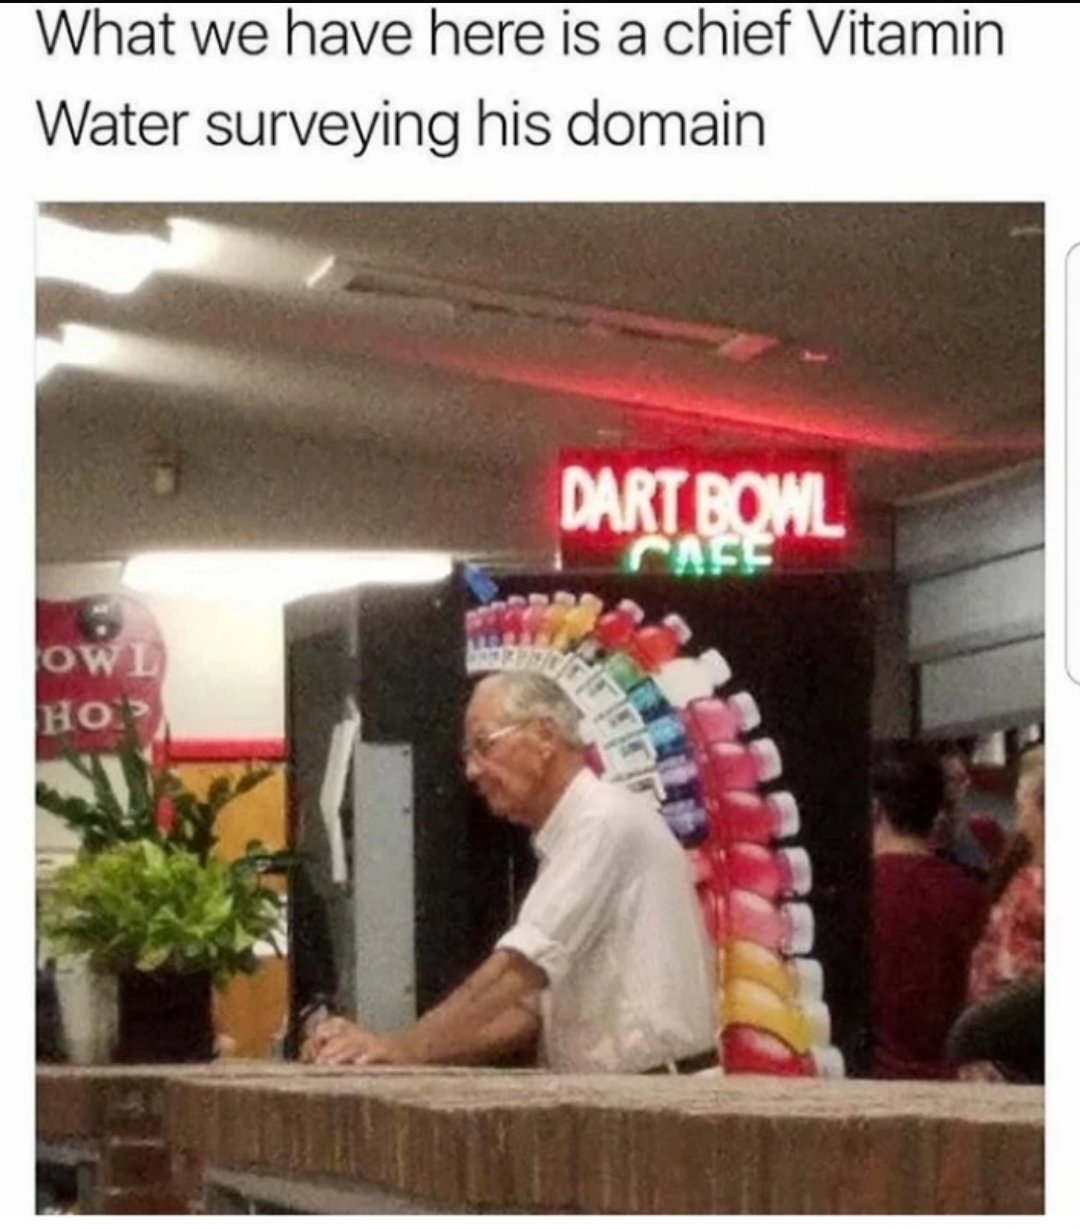 chief vitamin water surveys his domain - What we have here is a chief Vitamin Water surveying his domain Dart Bowl Hos